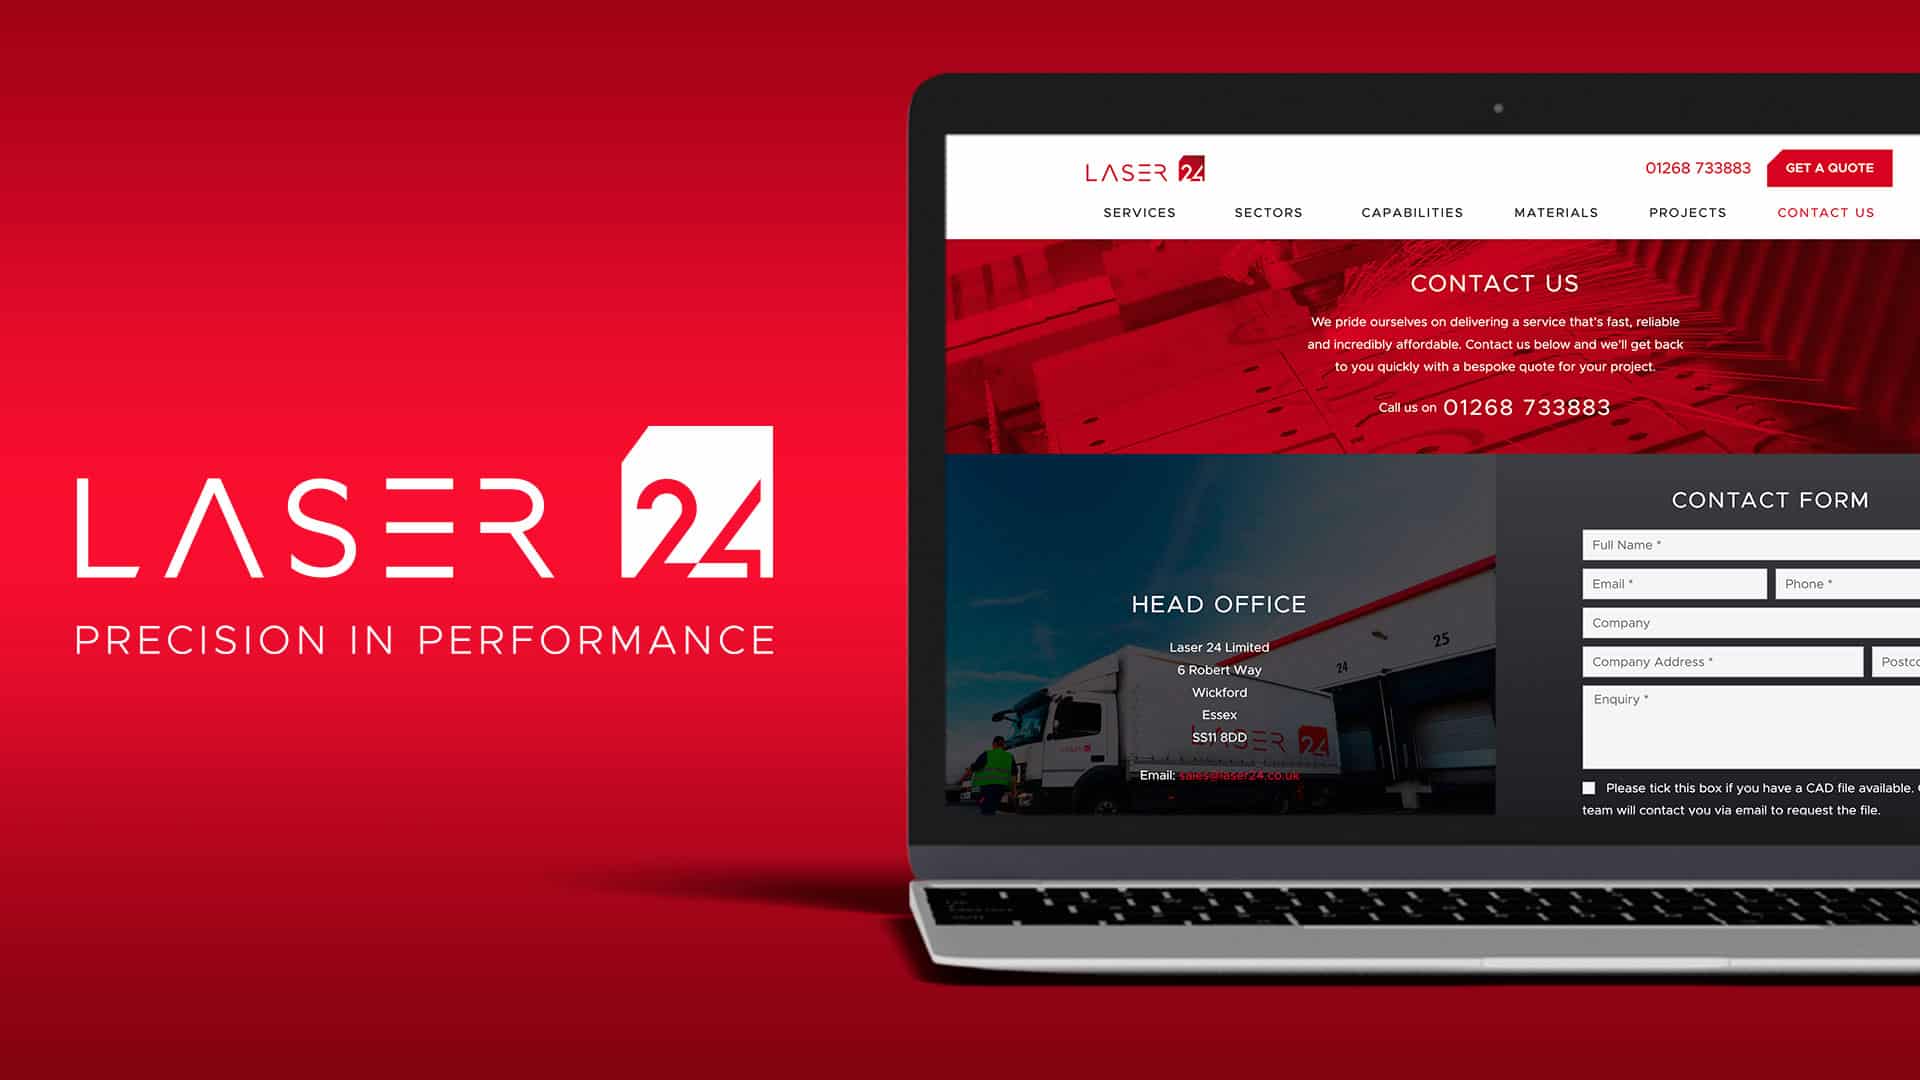 Laser 24 website designed by web design agency Swan Creative